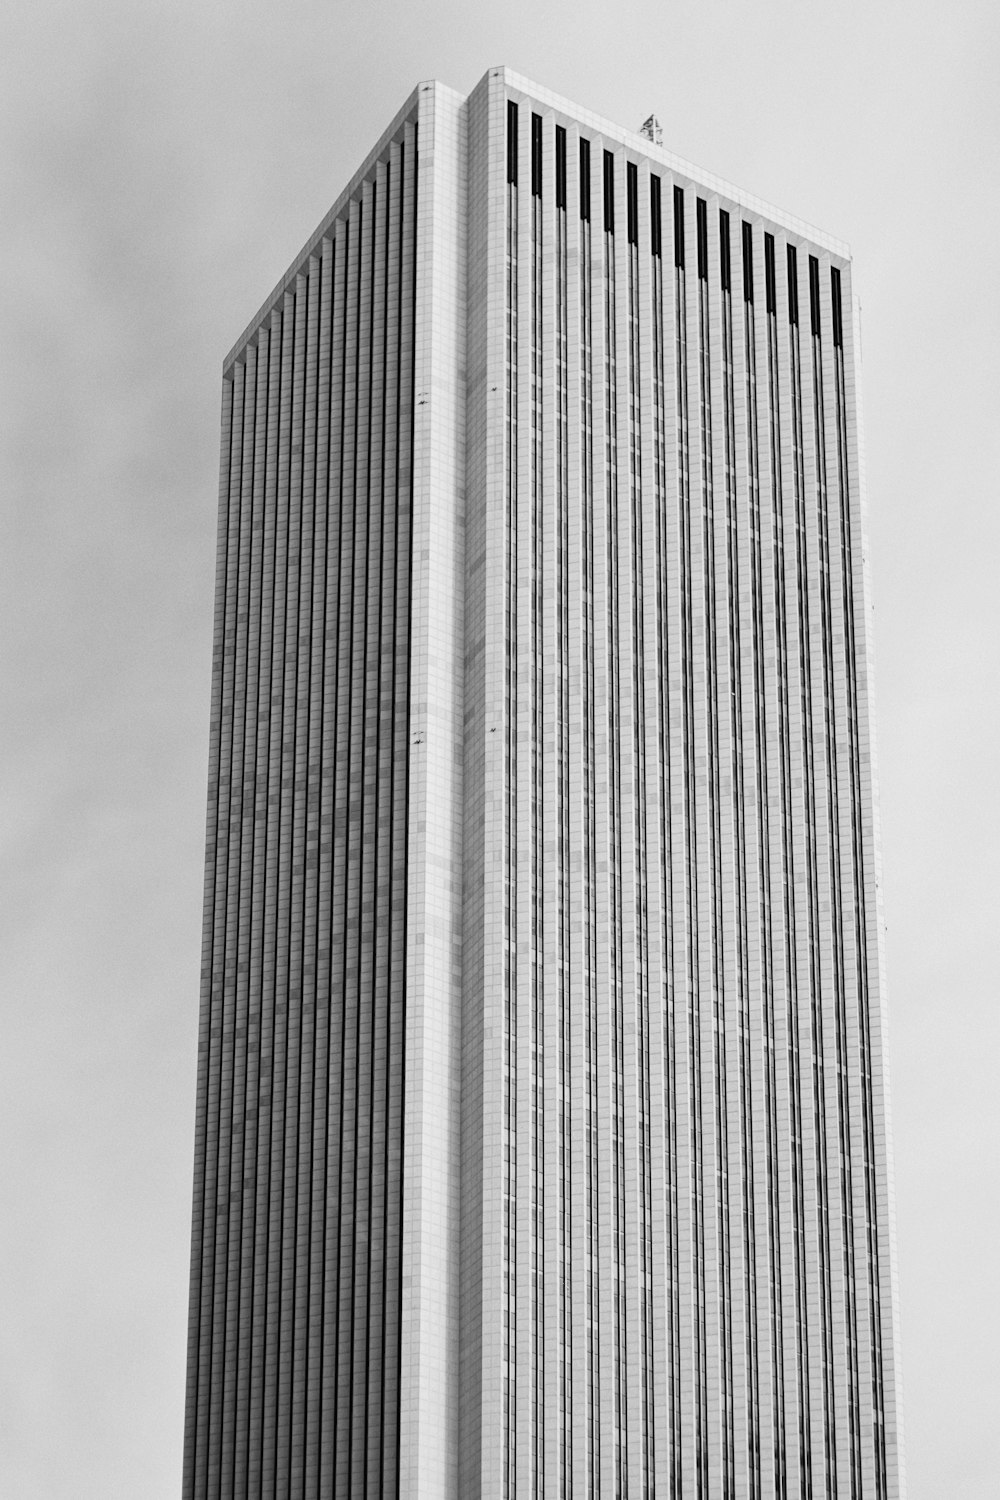 gray tall building